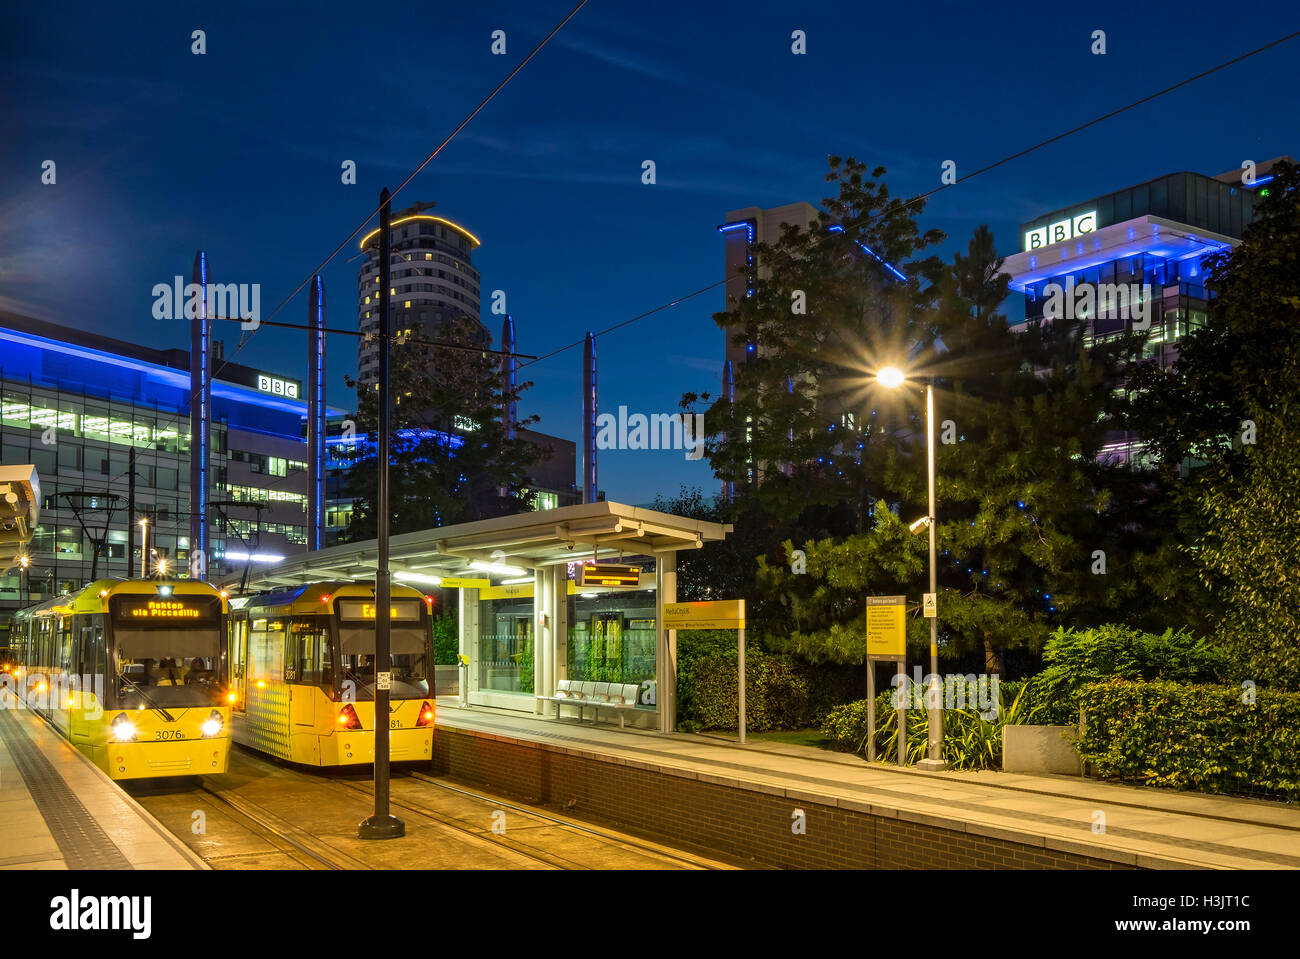 Manchester-Straßenbahnen in MediacityUK Tram Station, MediacityUK, Salford Quays, Manchester, England, UK Stockfoto